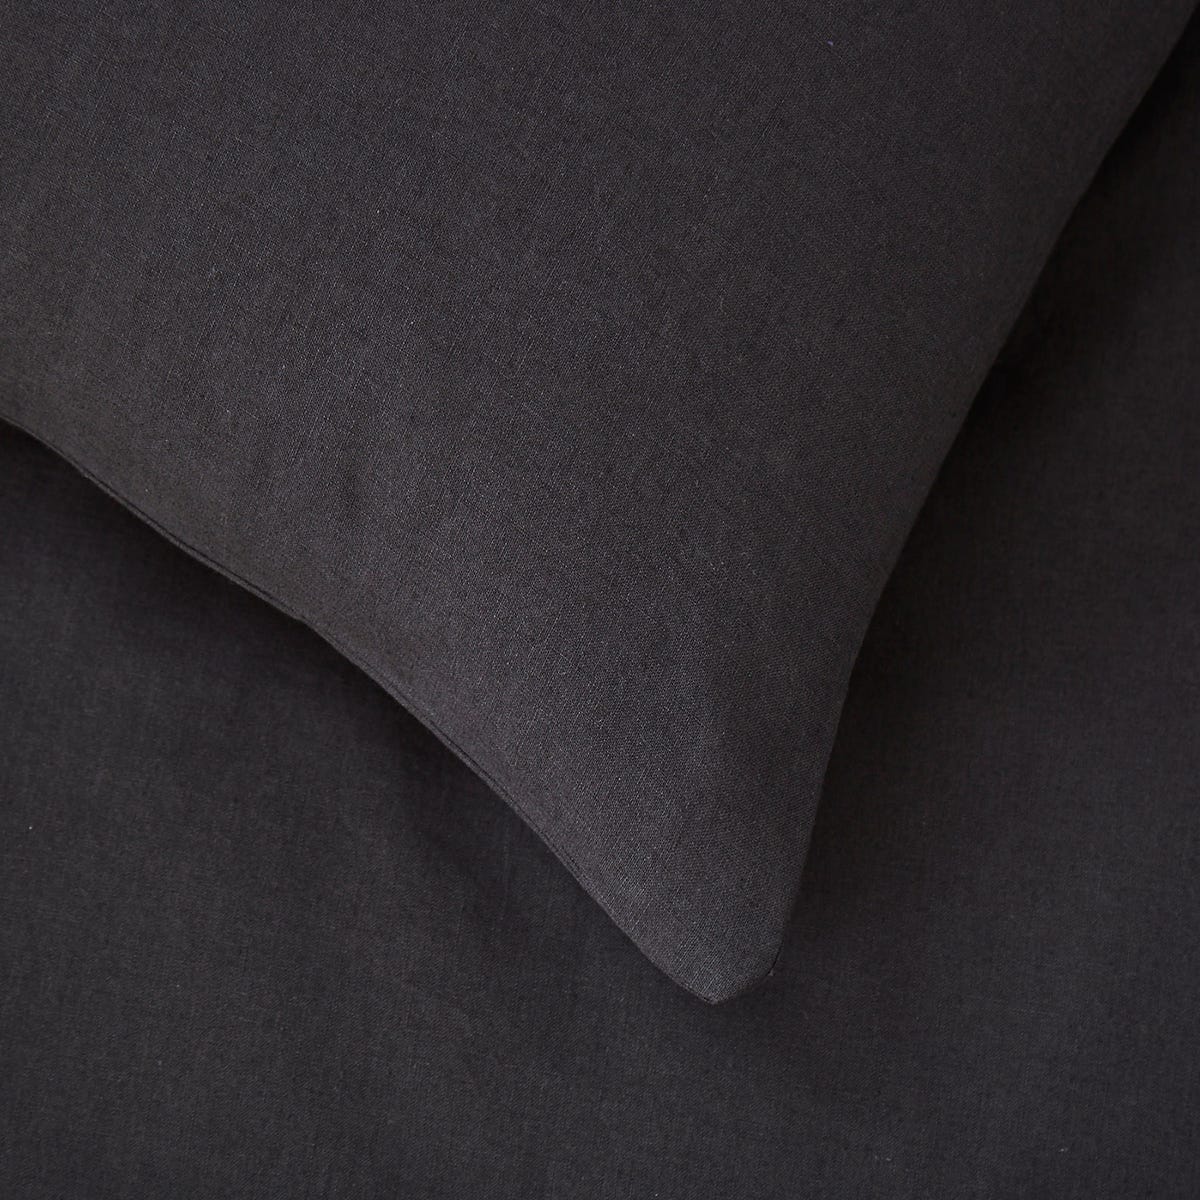 Pair Of Ravello Classic Pillowcases - Linen/Cotton - Charcoal - DUSK